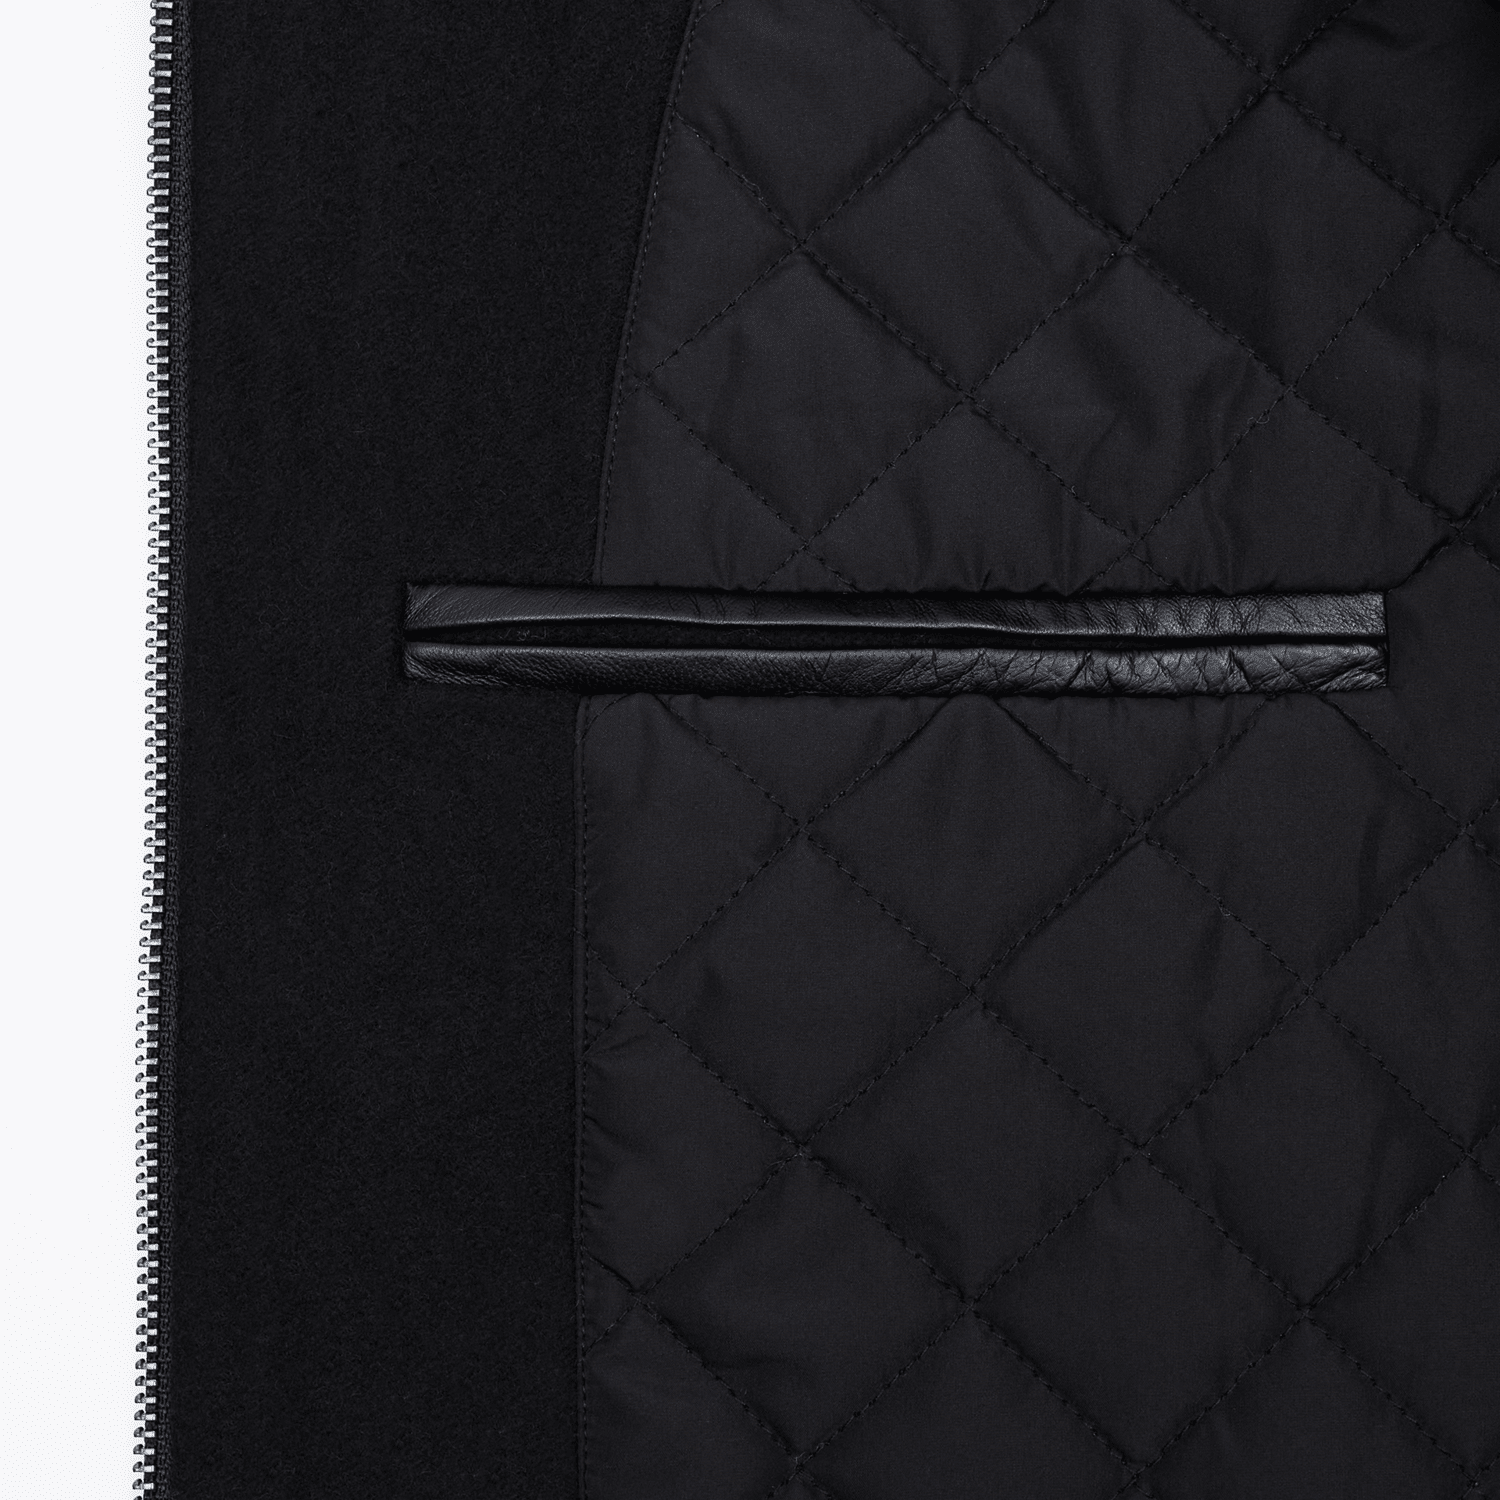 NYON x Knicks Motto Always Varsity Wool Jacket - Pocket View